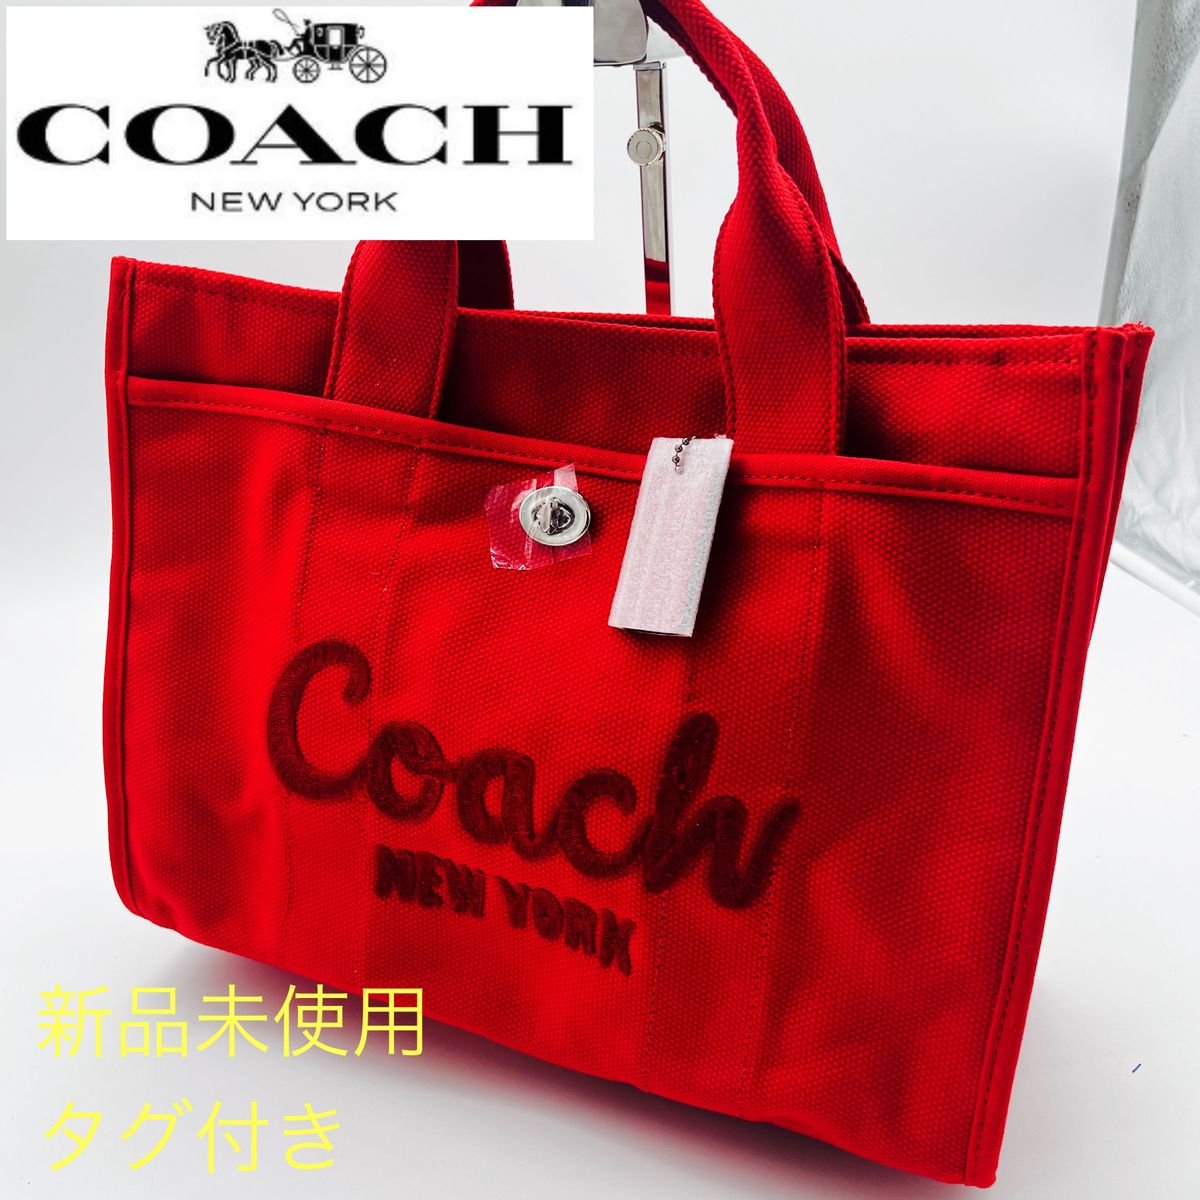 COACH coach コーチ カーゴ トート レッド 34 ラージ-